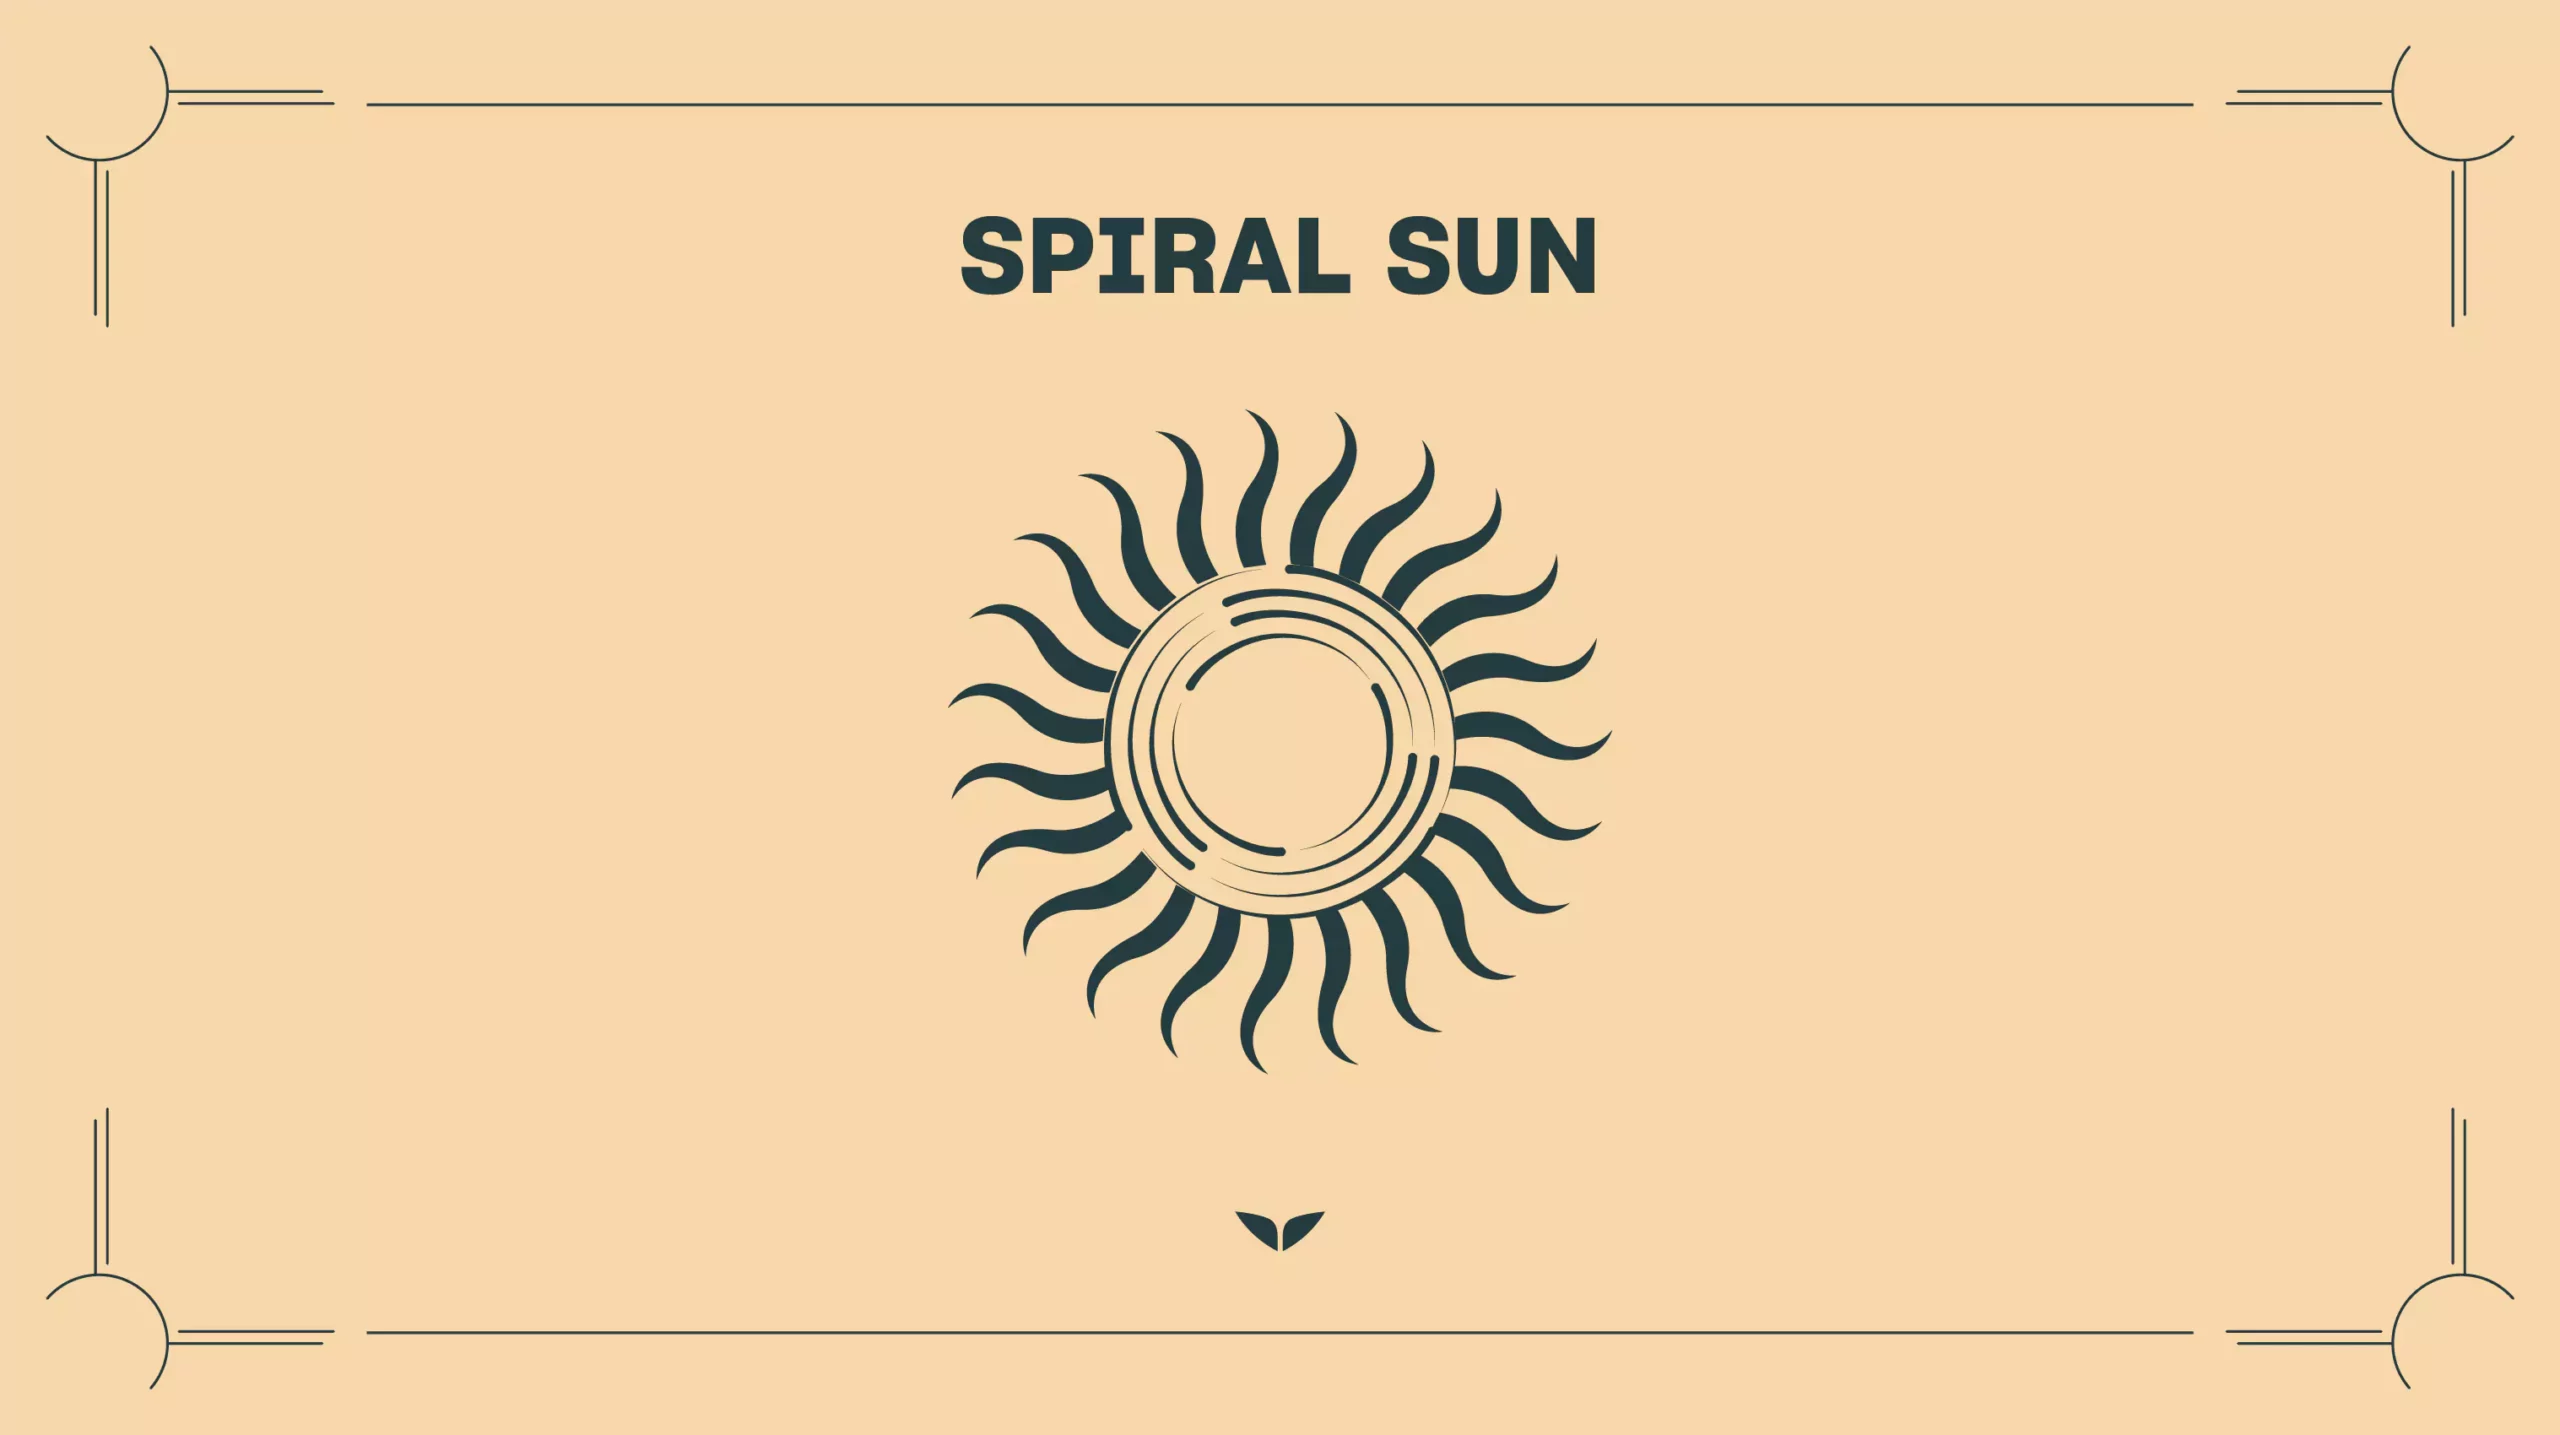 Custom graphic of the spiritual symbol, Spiral Sun